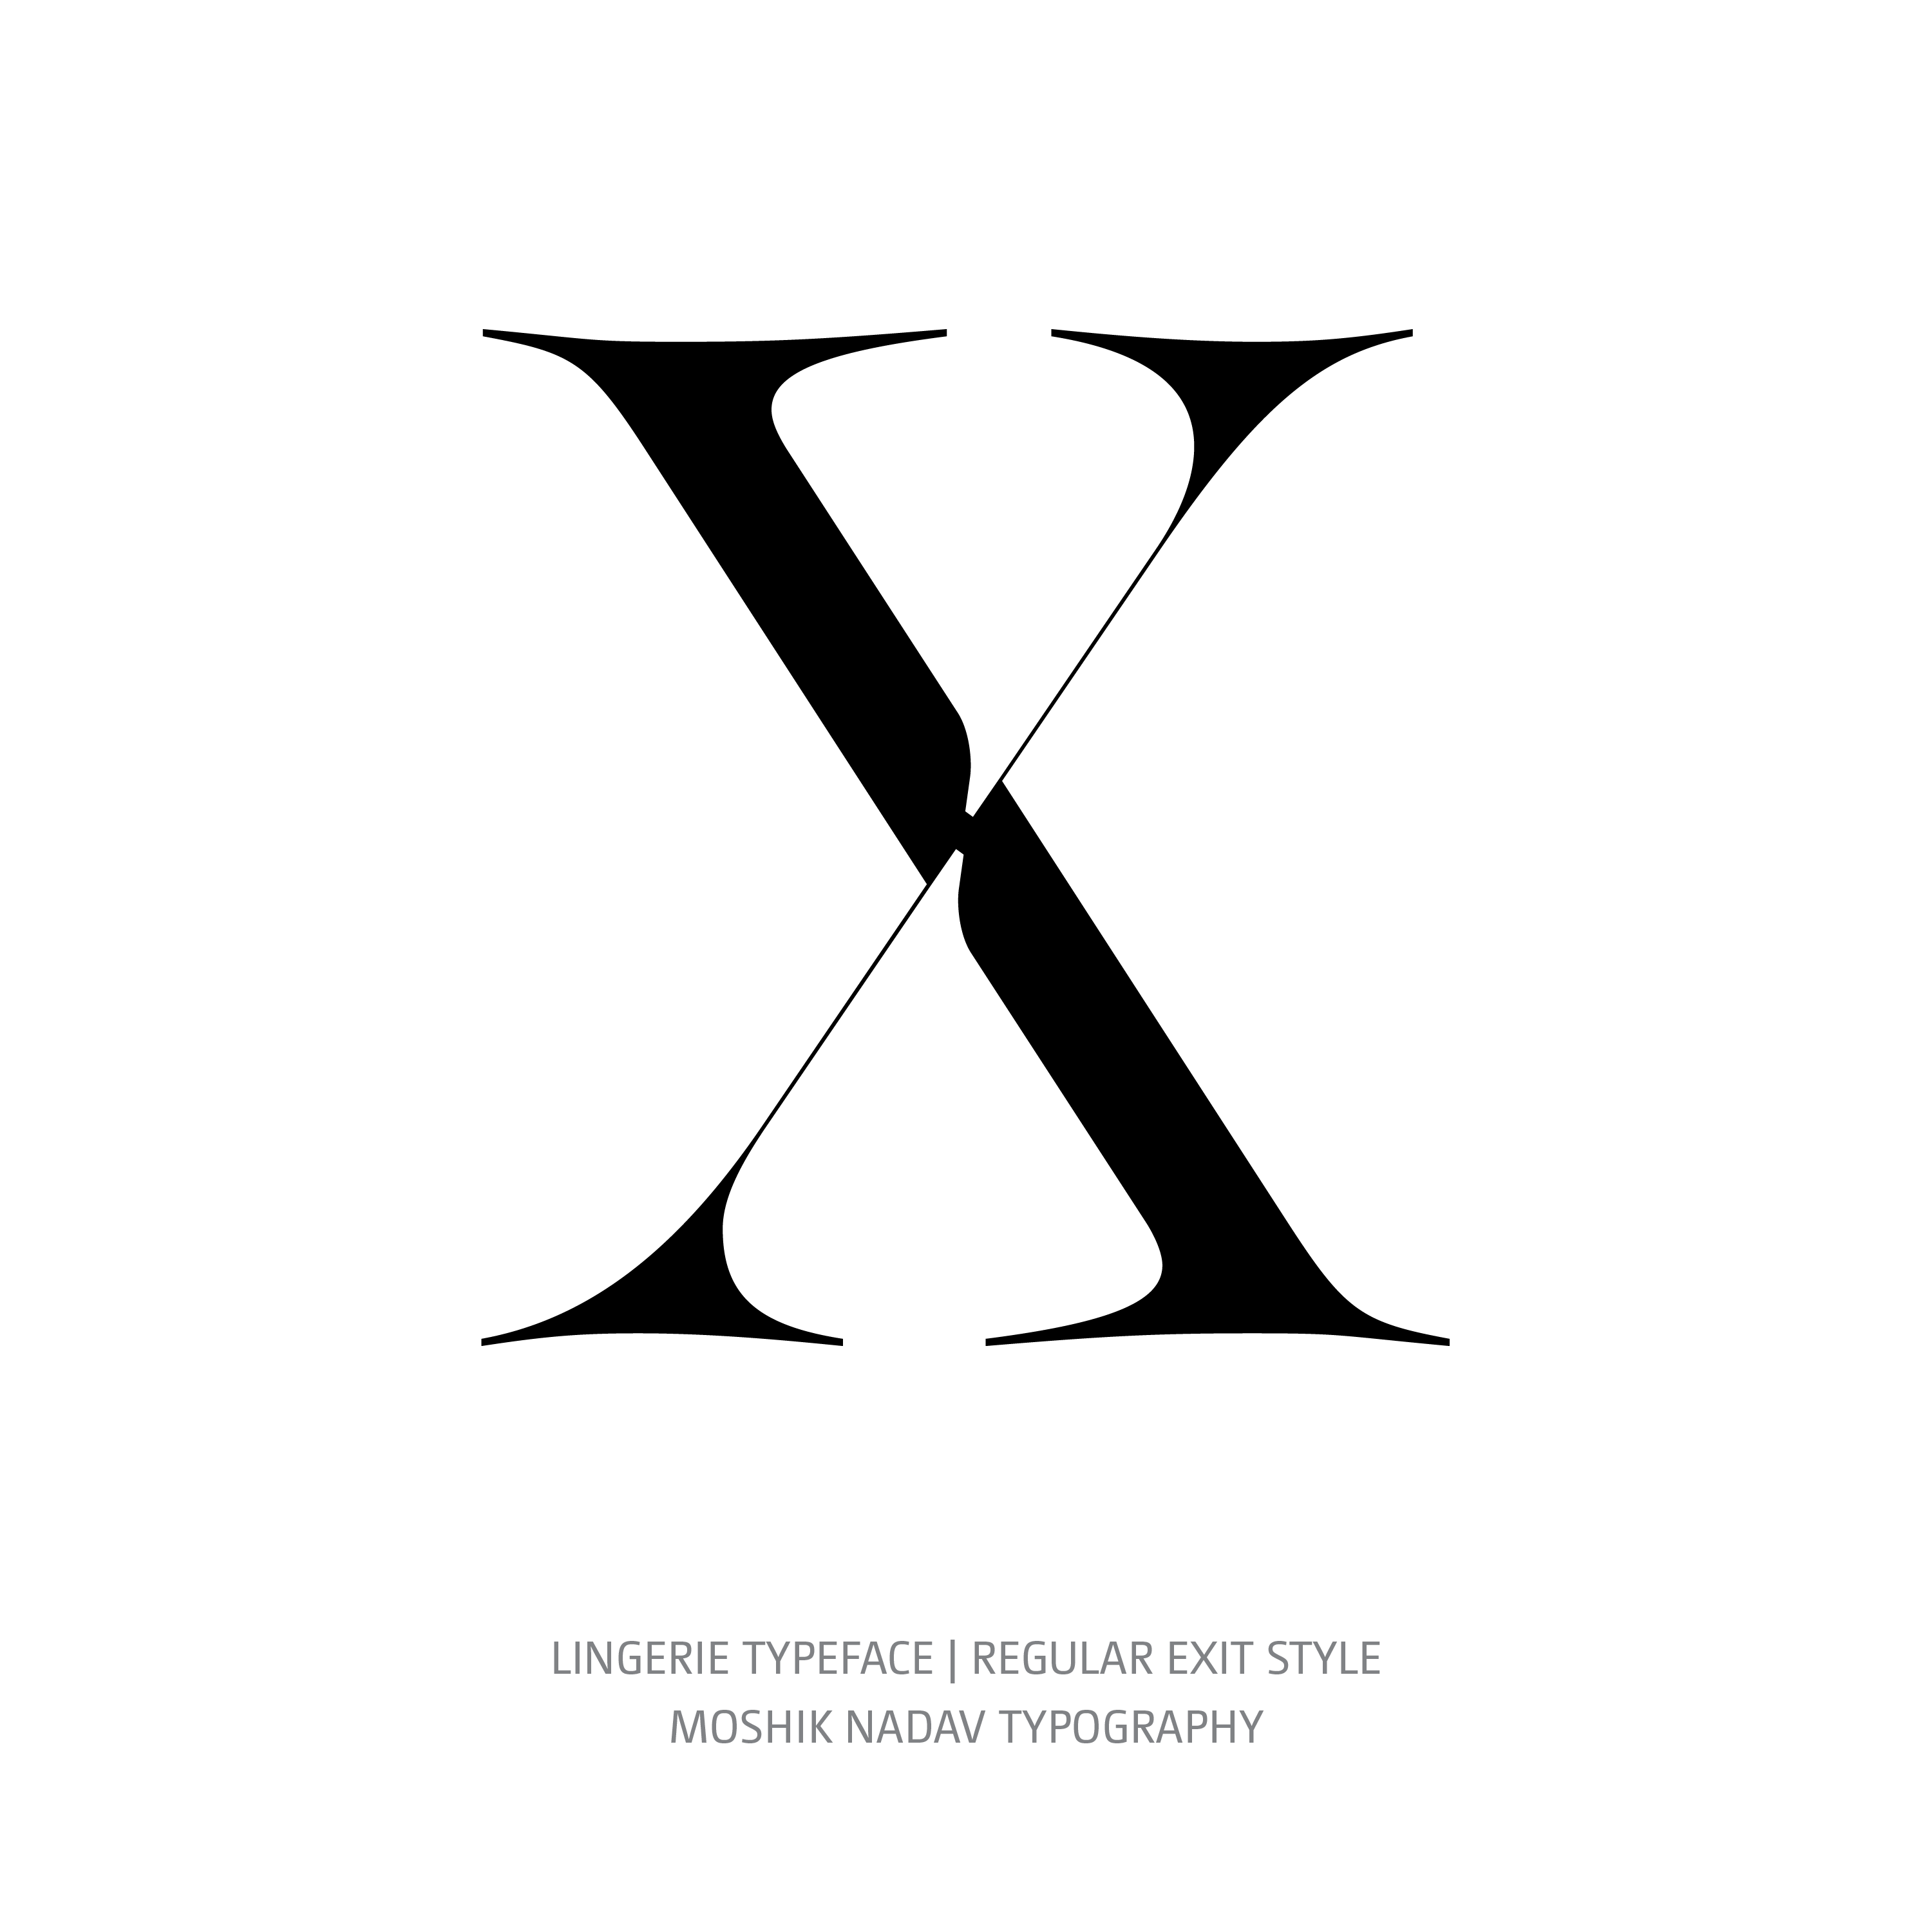 Lingerie Typeface Regular Exit X